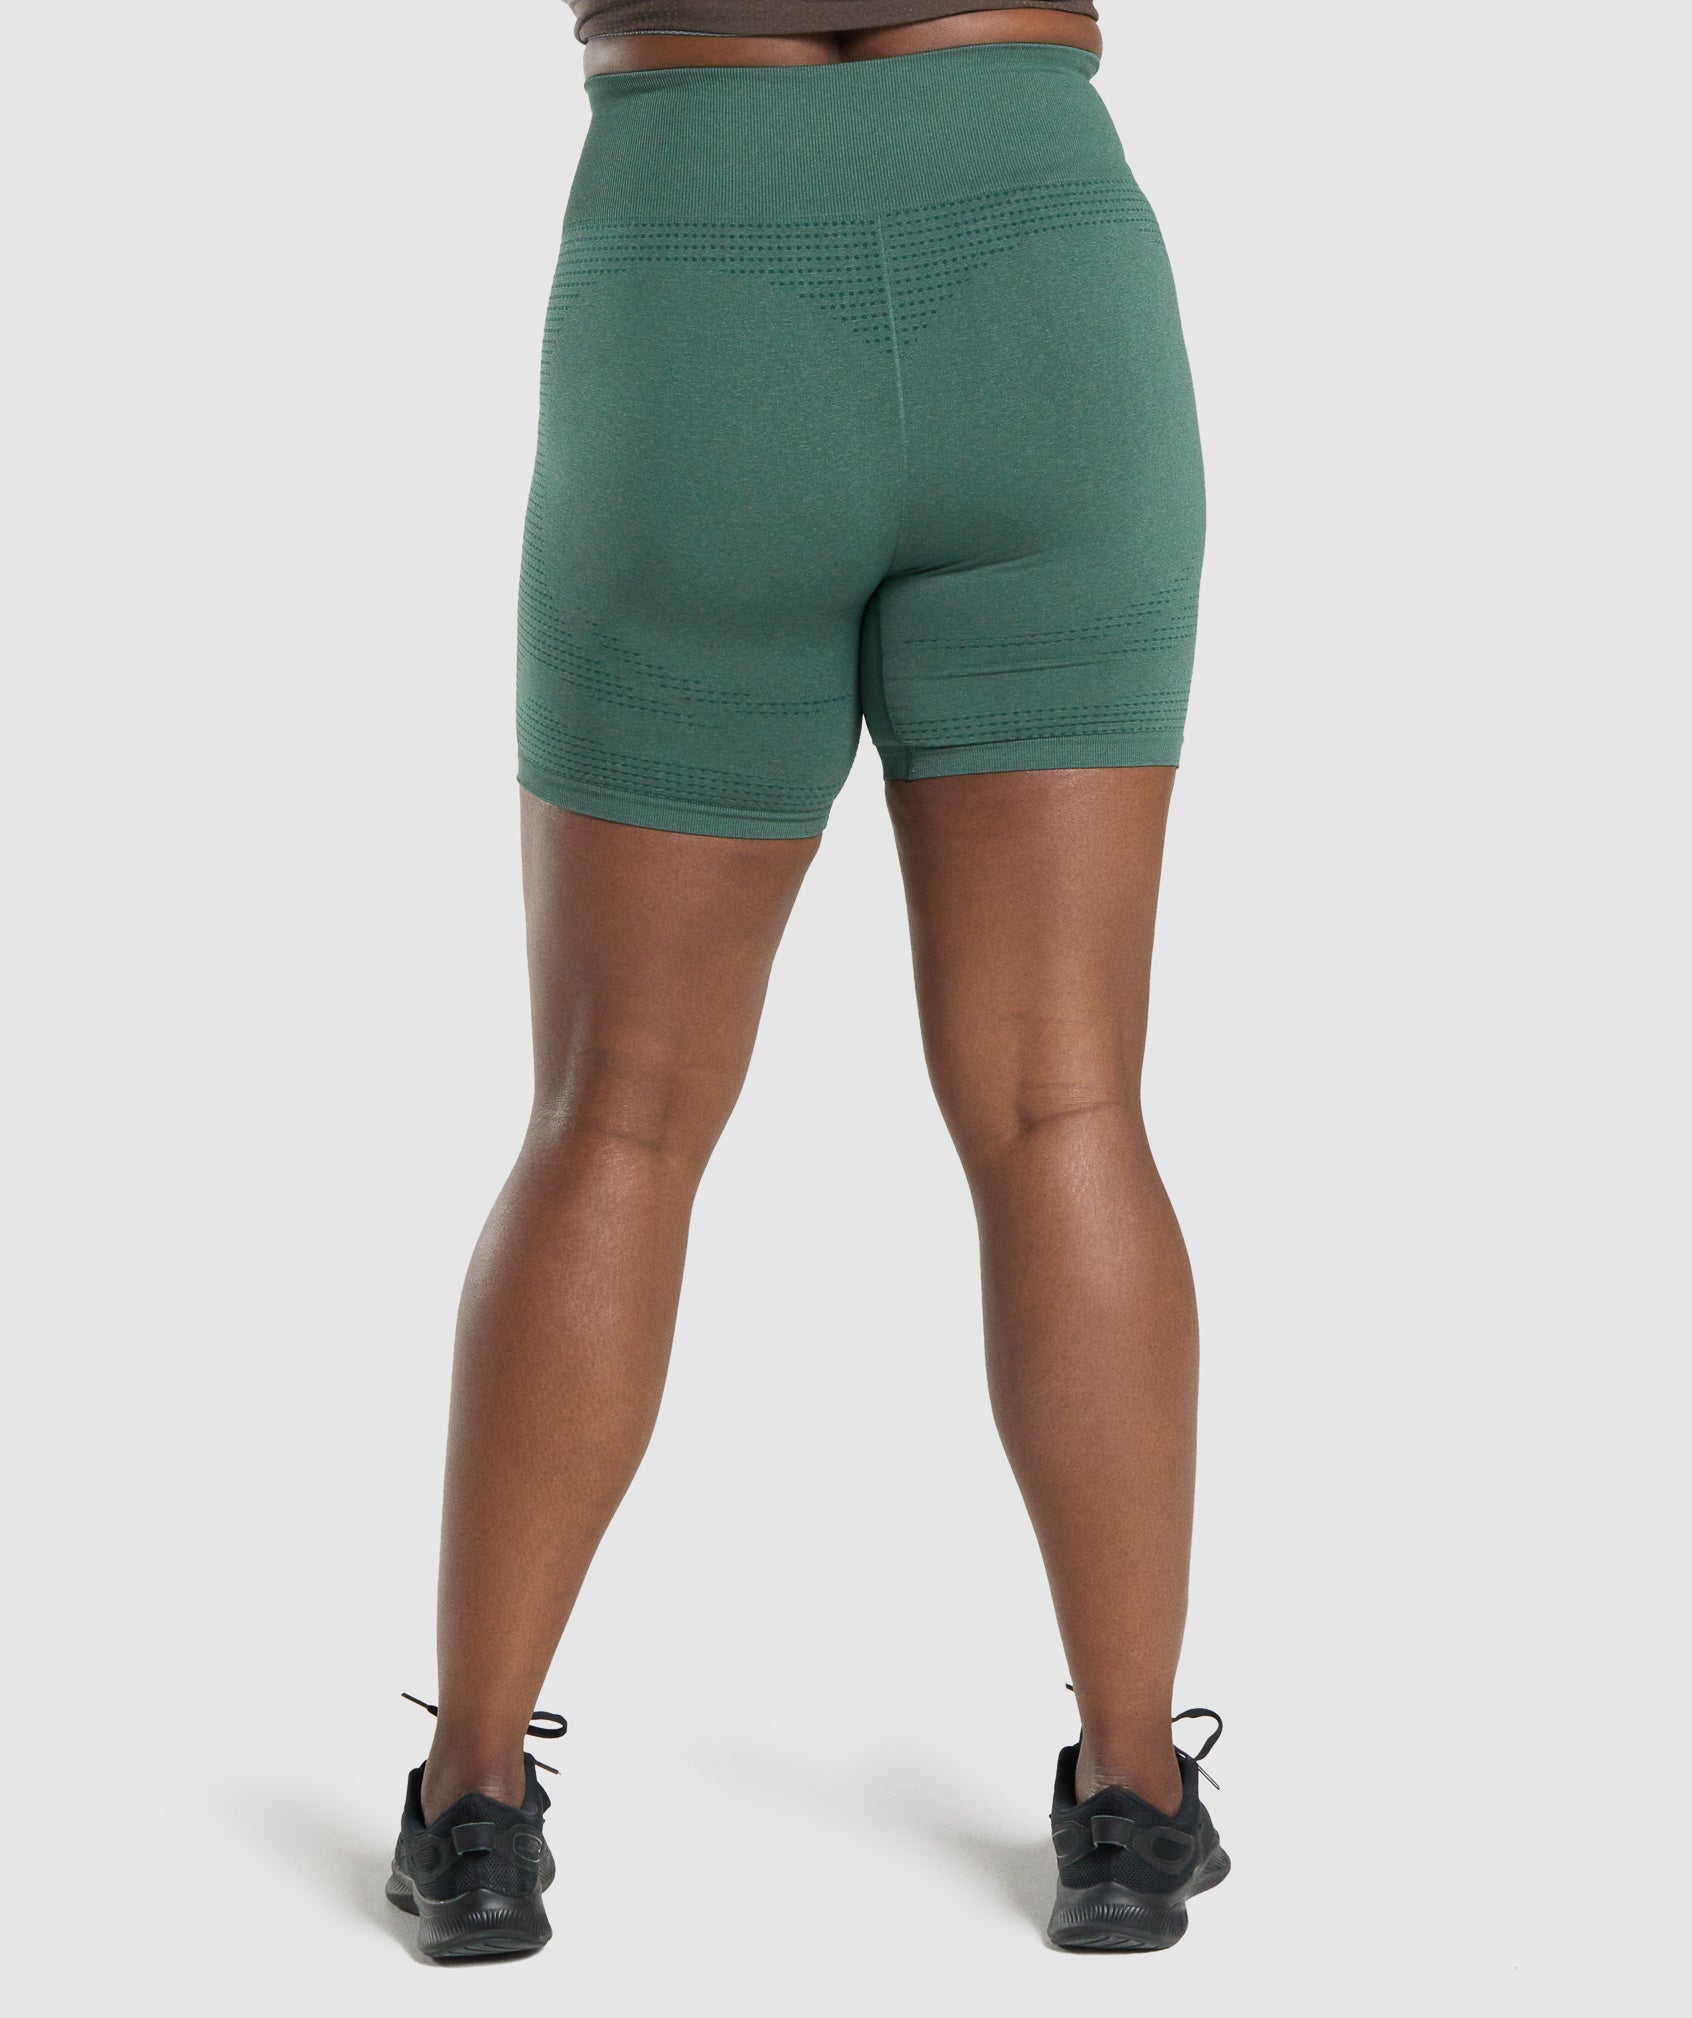 Vital Seamless 2.0 Shorts in Dark Green Marl